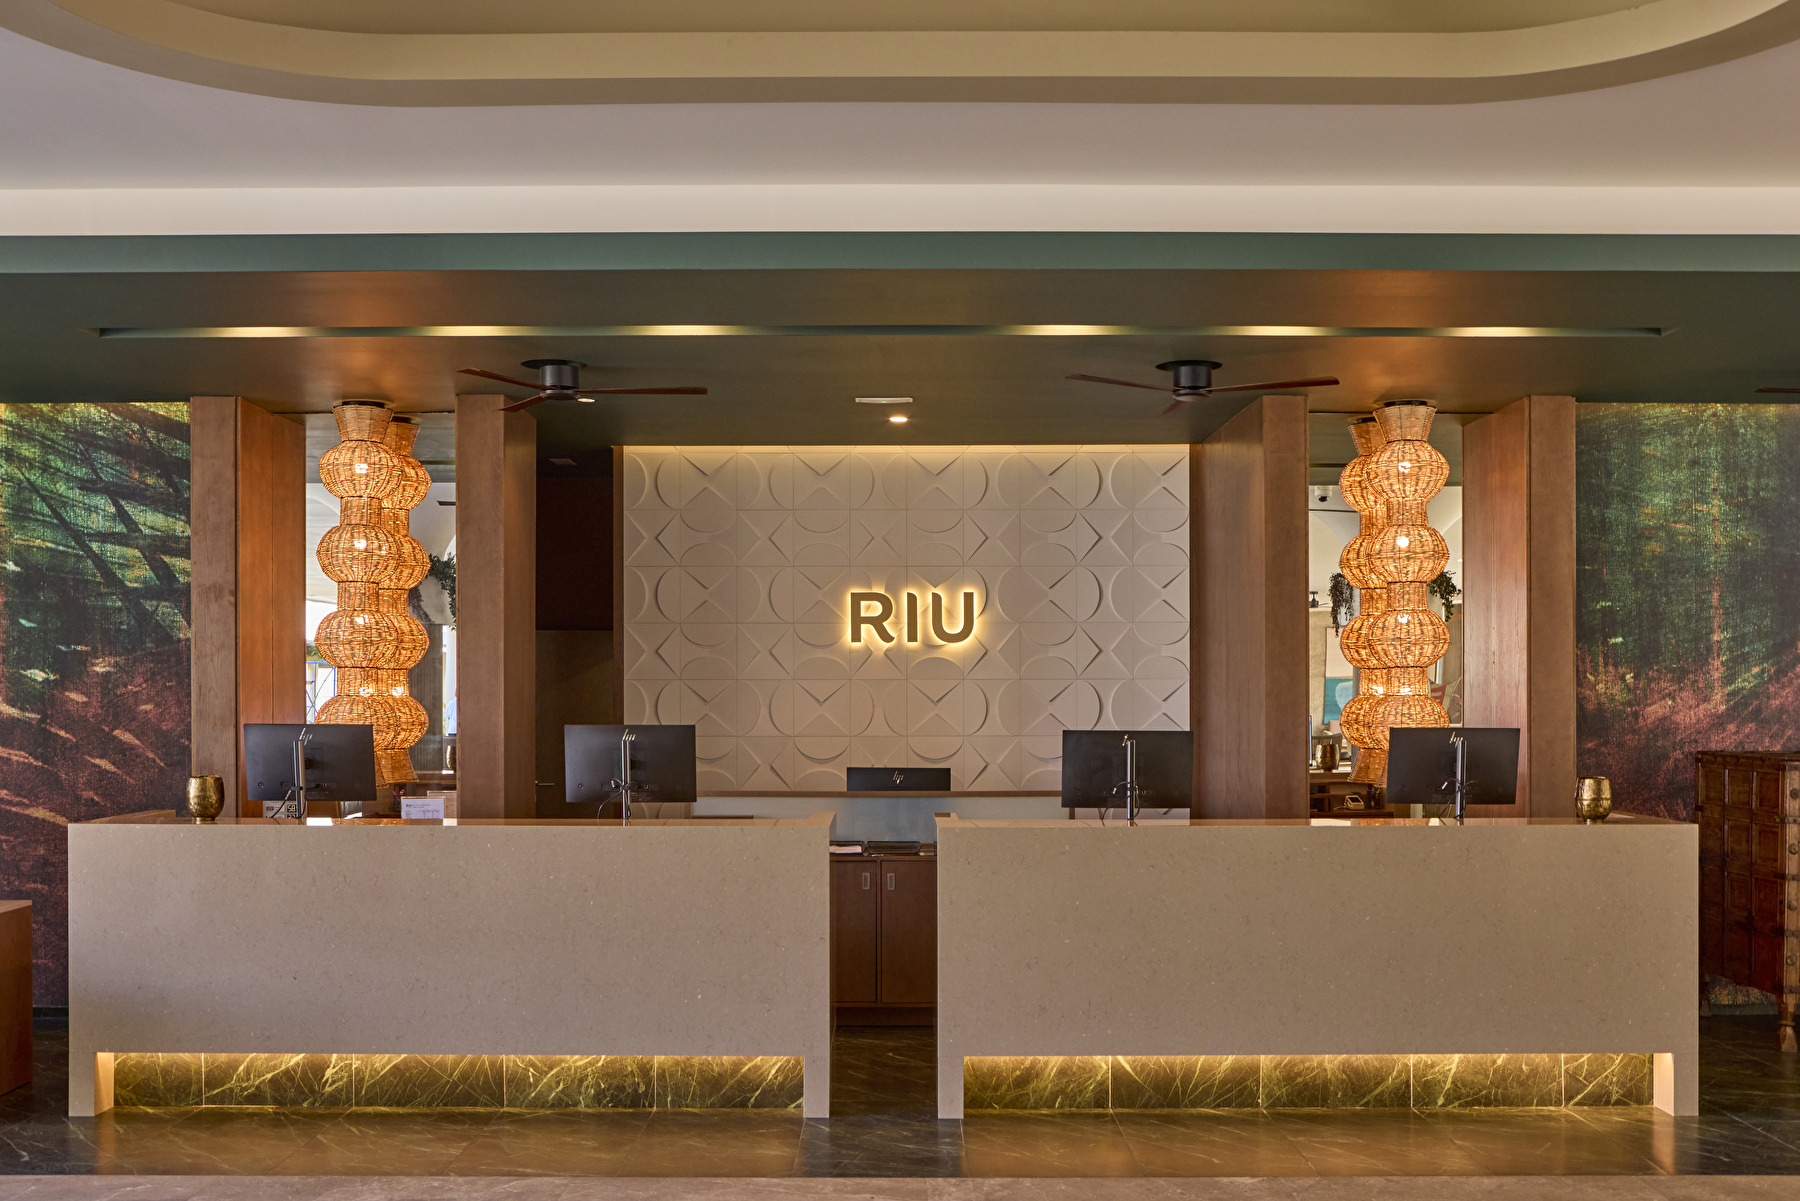 Rezeption im Hotel Riu Turquoise auf Mauritius